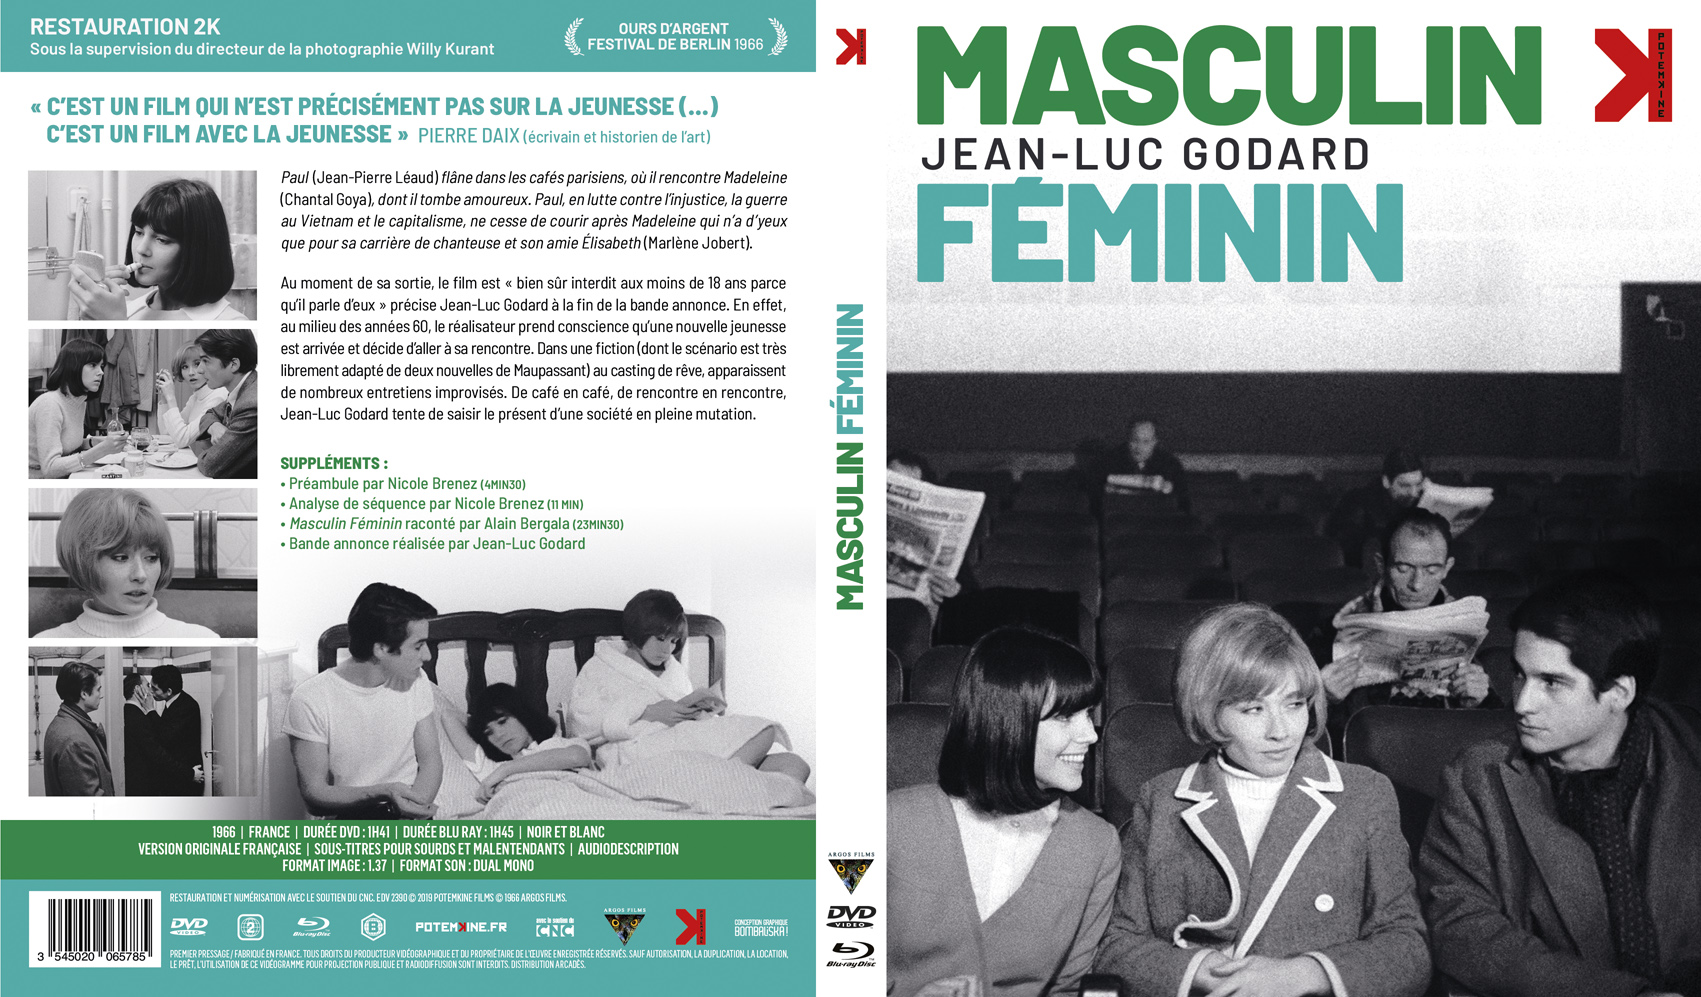 Jaquette DVD Masculin feminin (BLU-RAY)